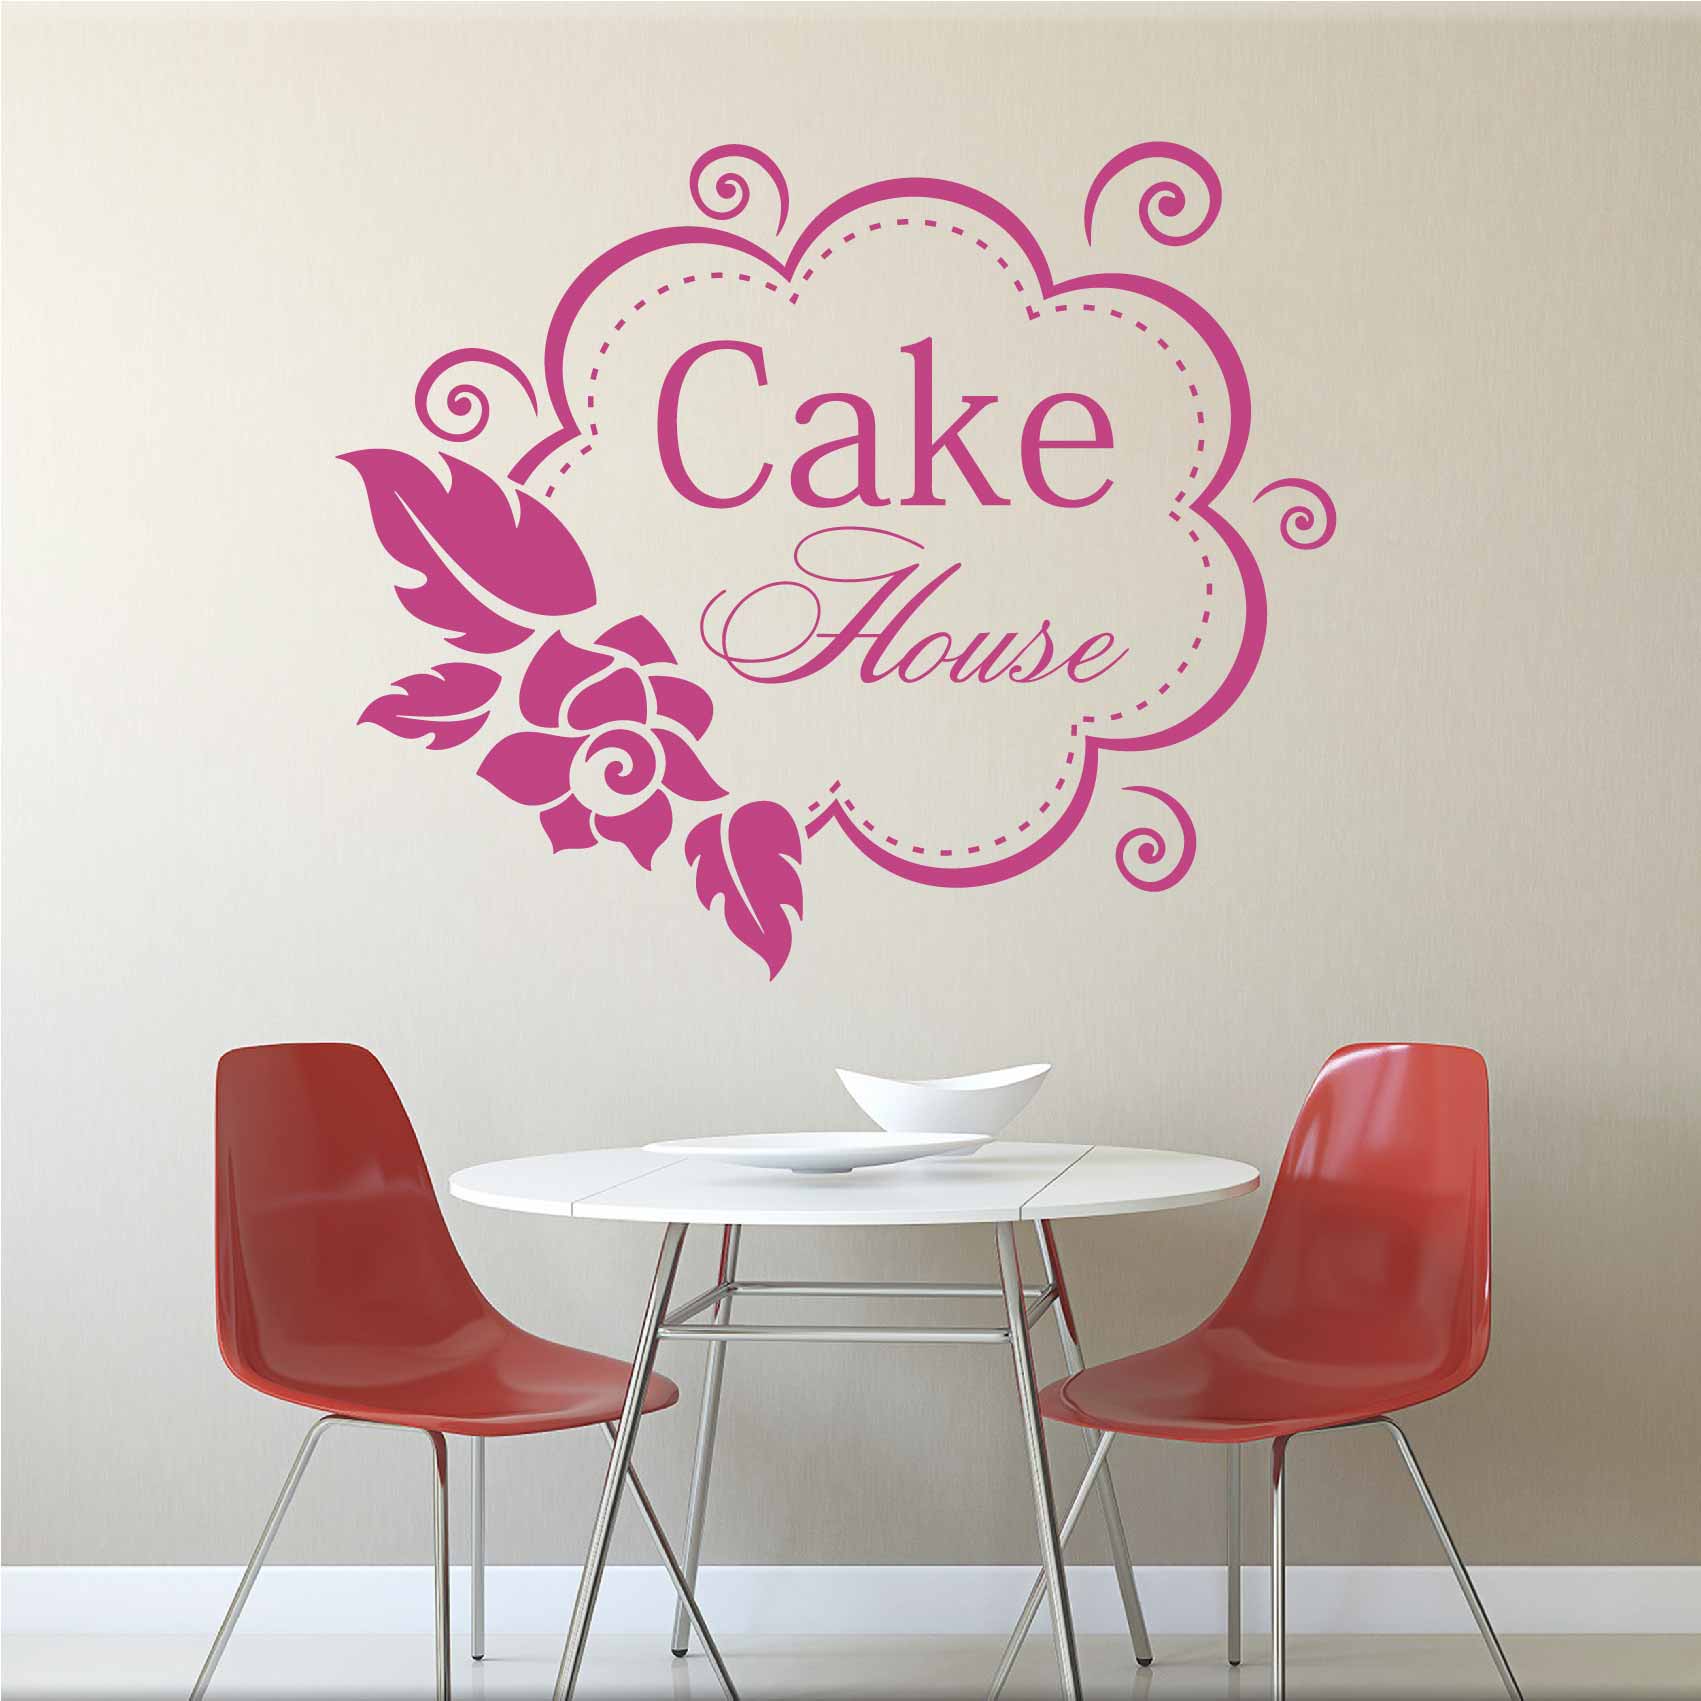 stickers-cake-house-ref11cupcake-autocollant-muraux-cuisine-salle-a-manger-salon-sticker-mural-deco-gateau-cupcakes-gateaux